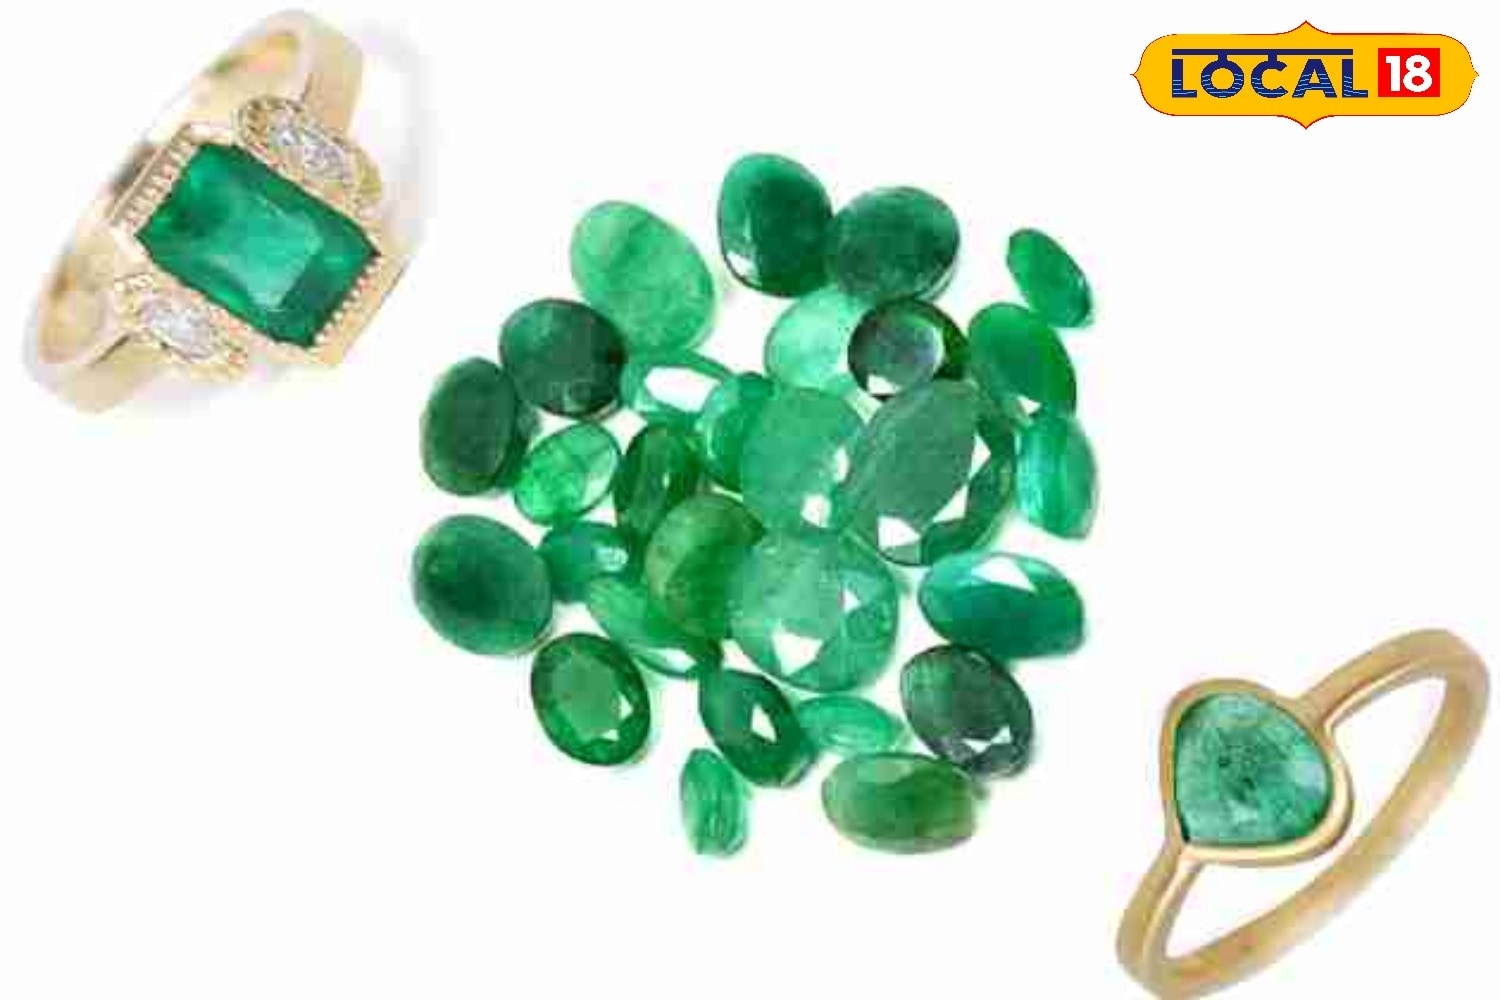 Oval Emerald Ring, Natural Panna Gemstone Ring - Shraddha Shree Gems